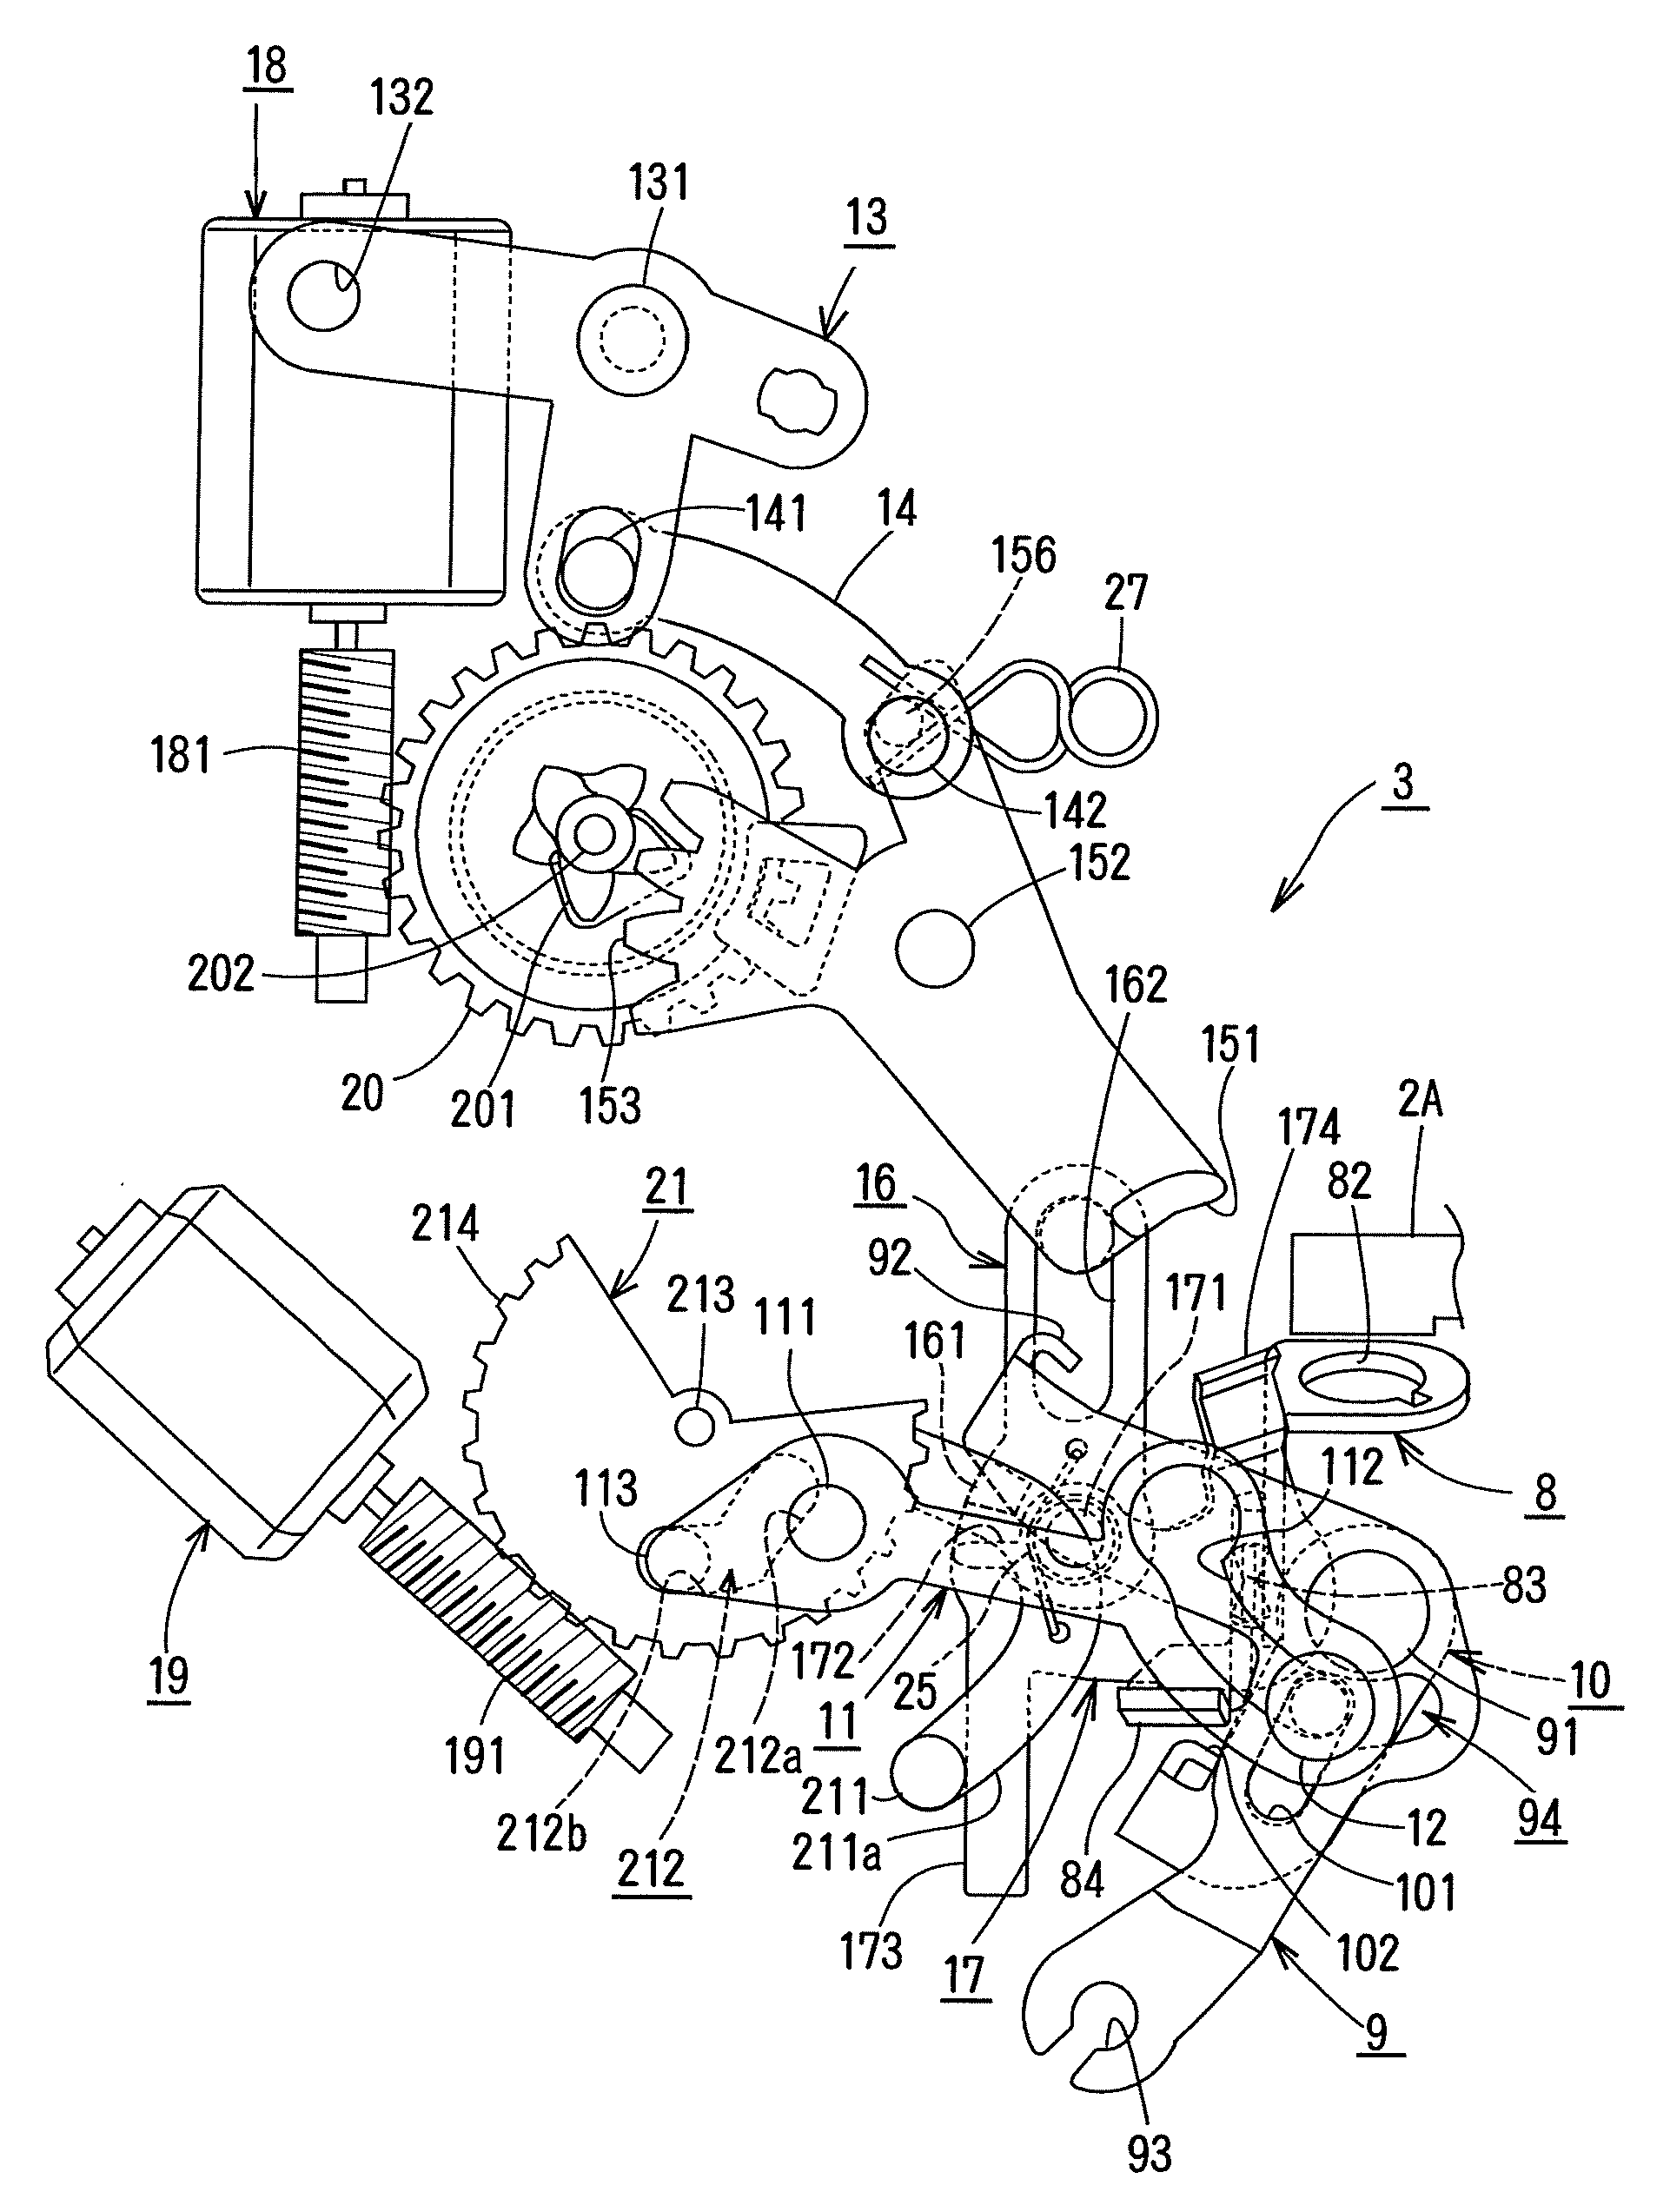 Door latch device in a motor vehicle